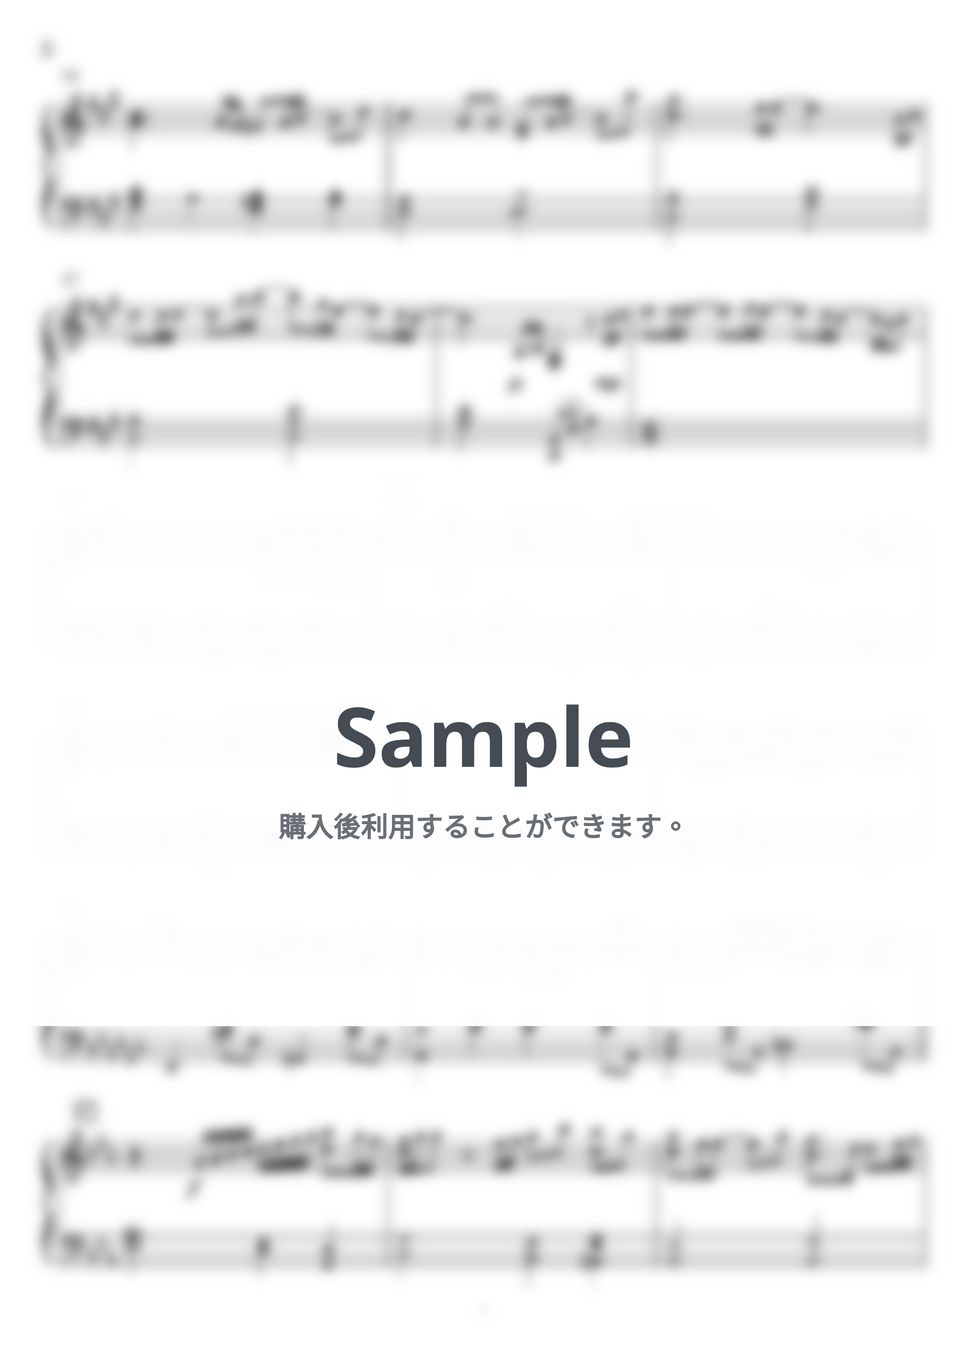 Official髭男dism - アポトーシス (ピアノソロ) by Miz